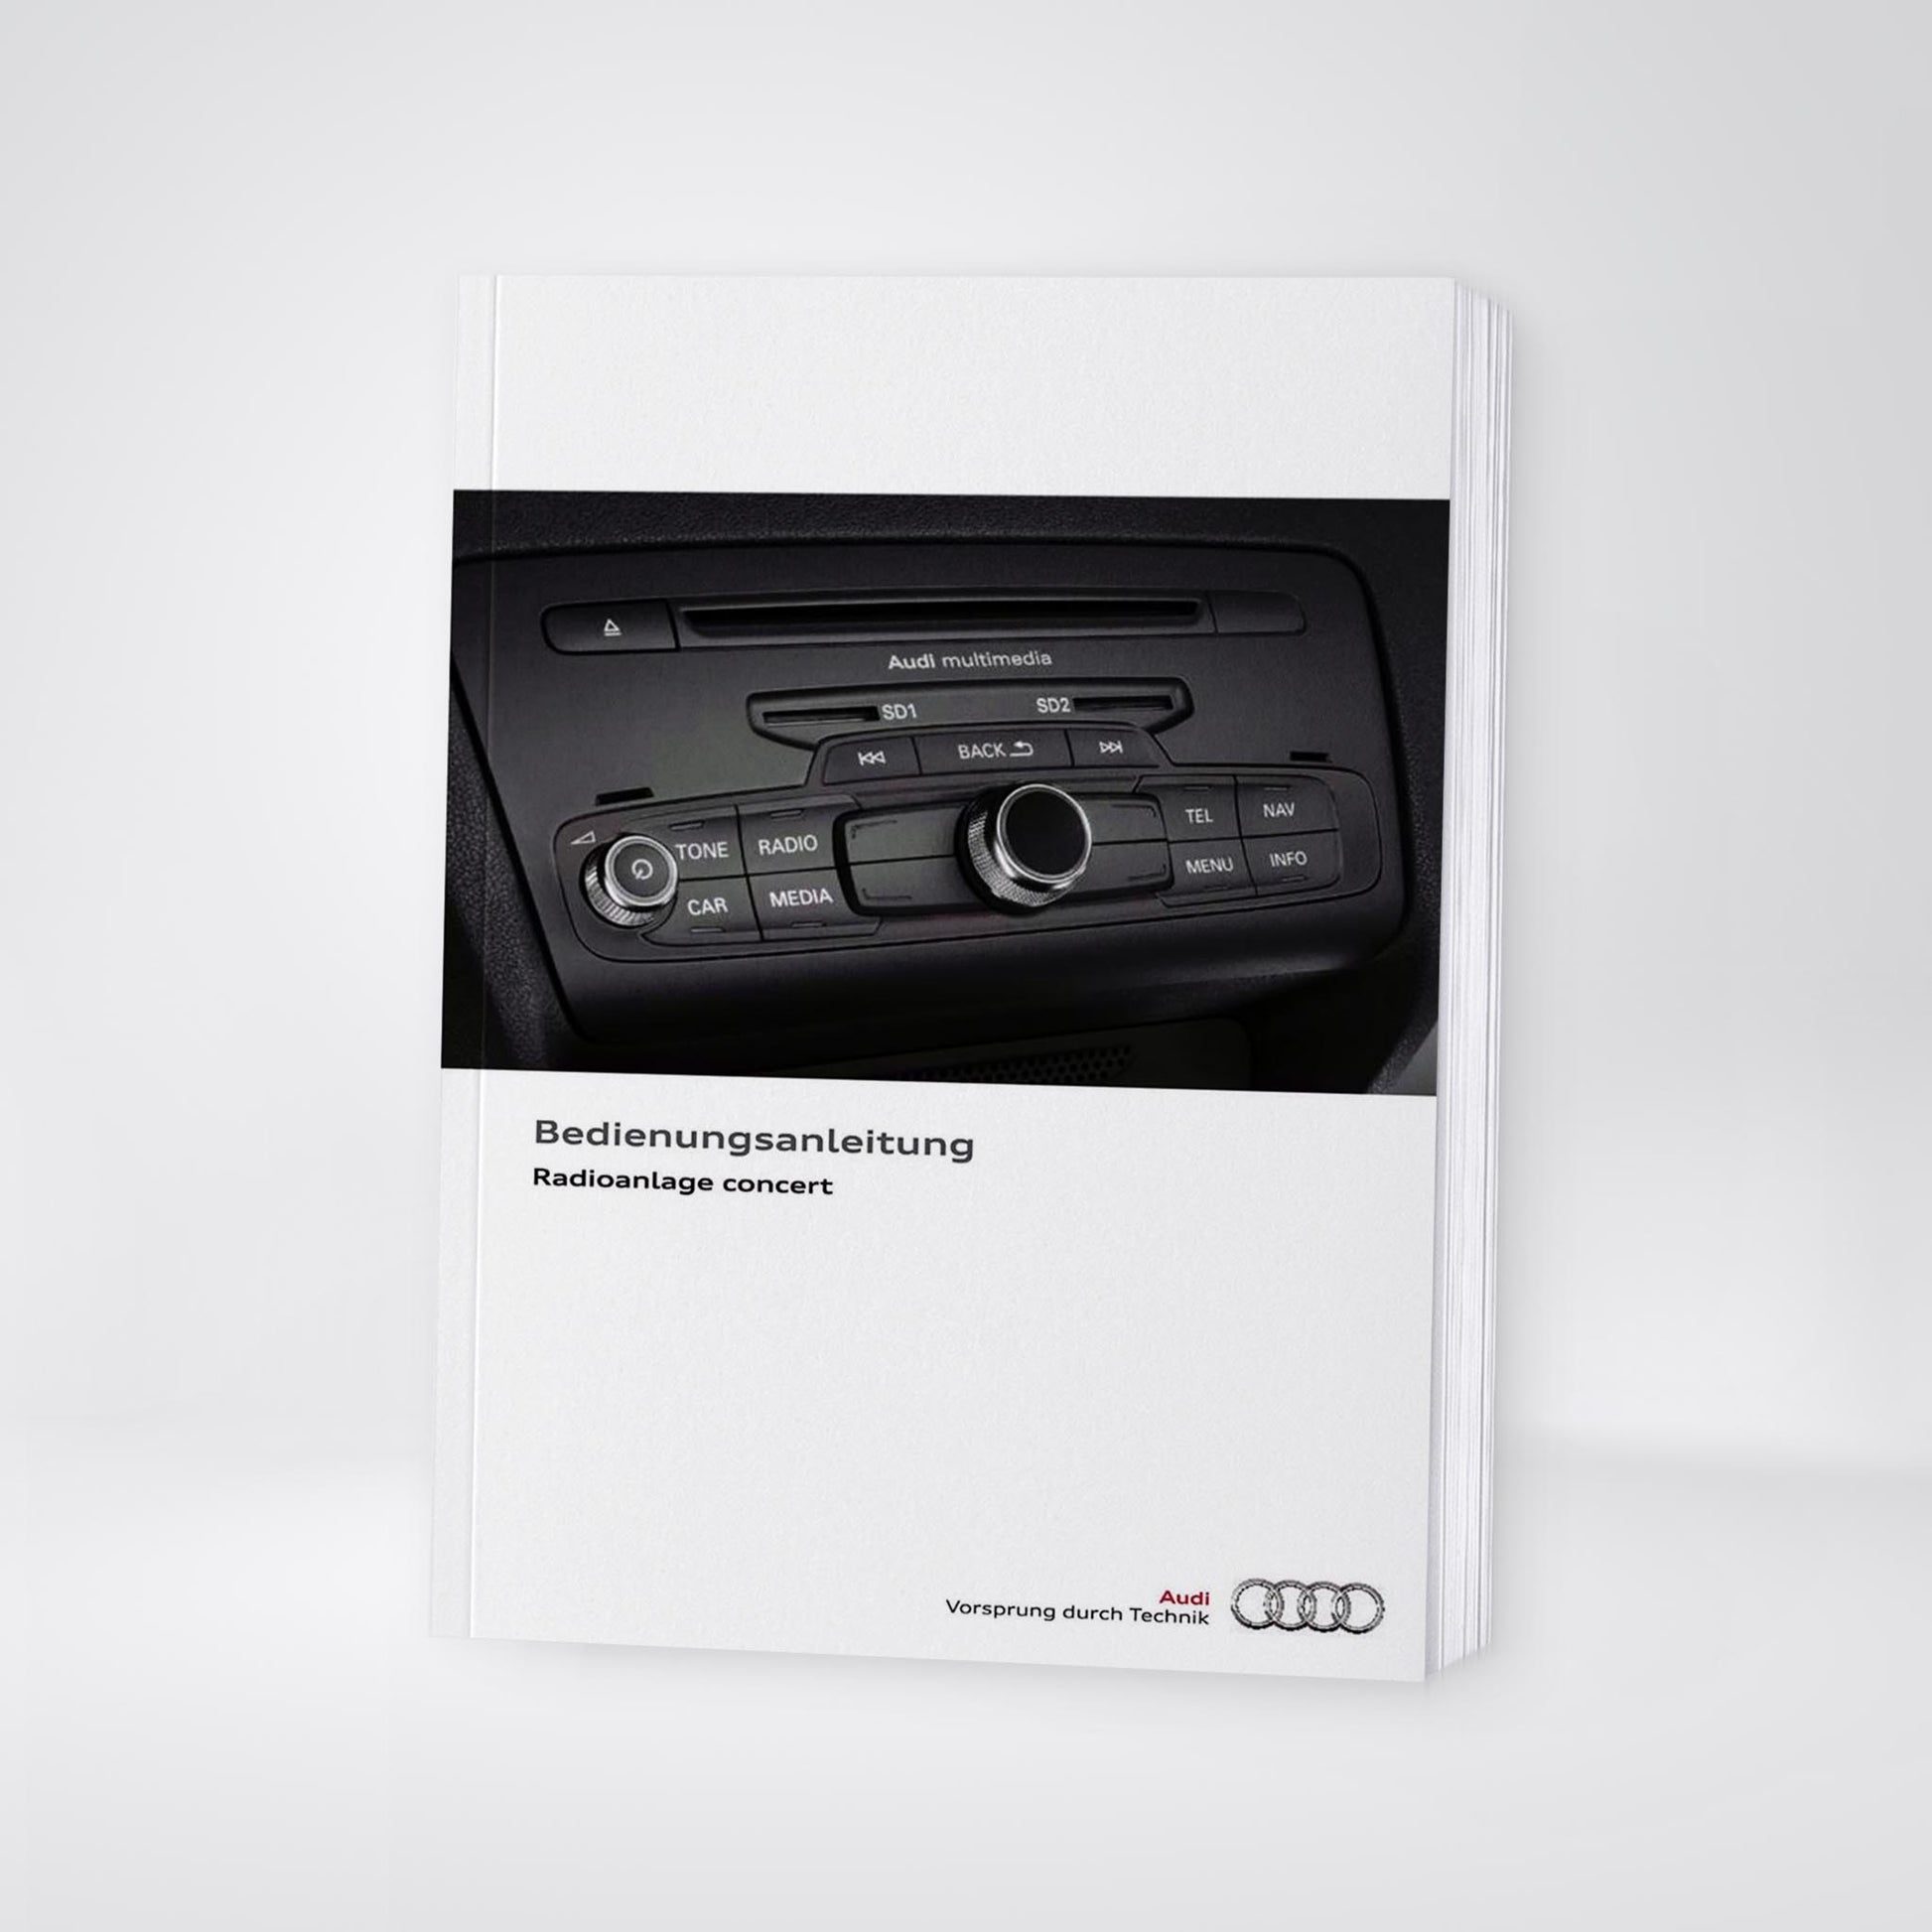 Audi Radio Concert Bedienungsanleitung 2016 – Car Manuals